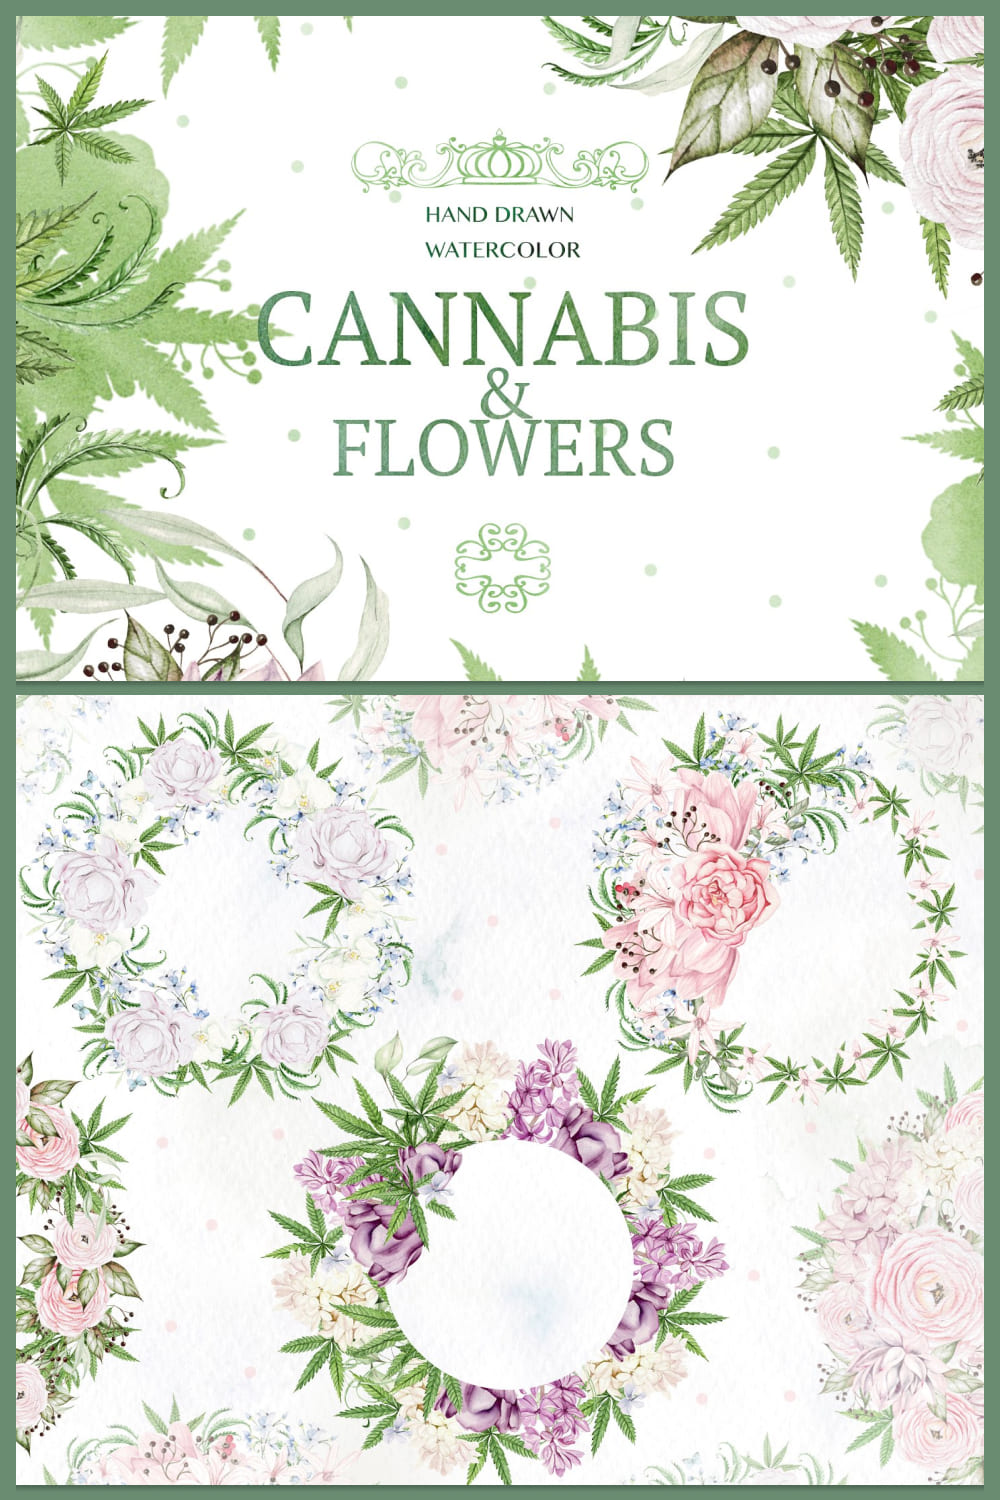 Watercolor Cannabis & Flowers - Pinterest.